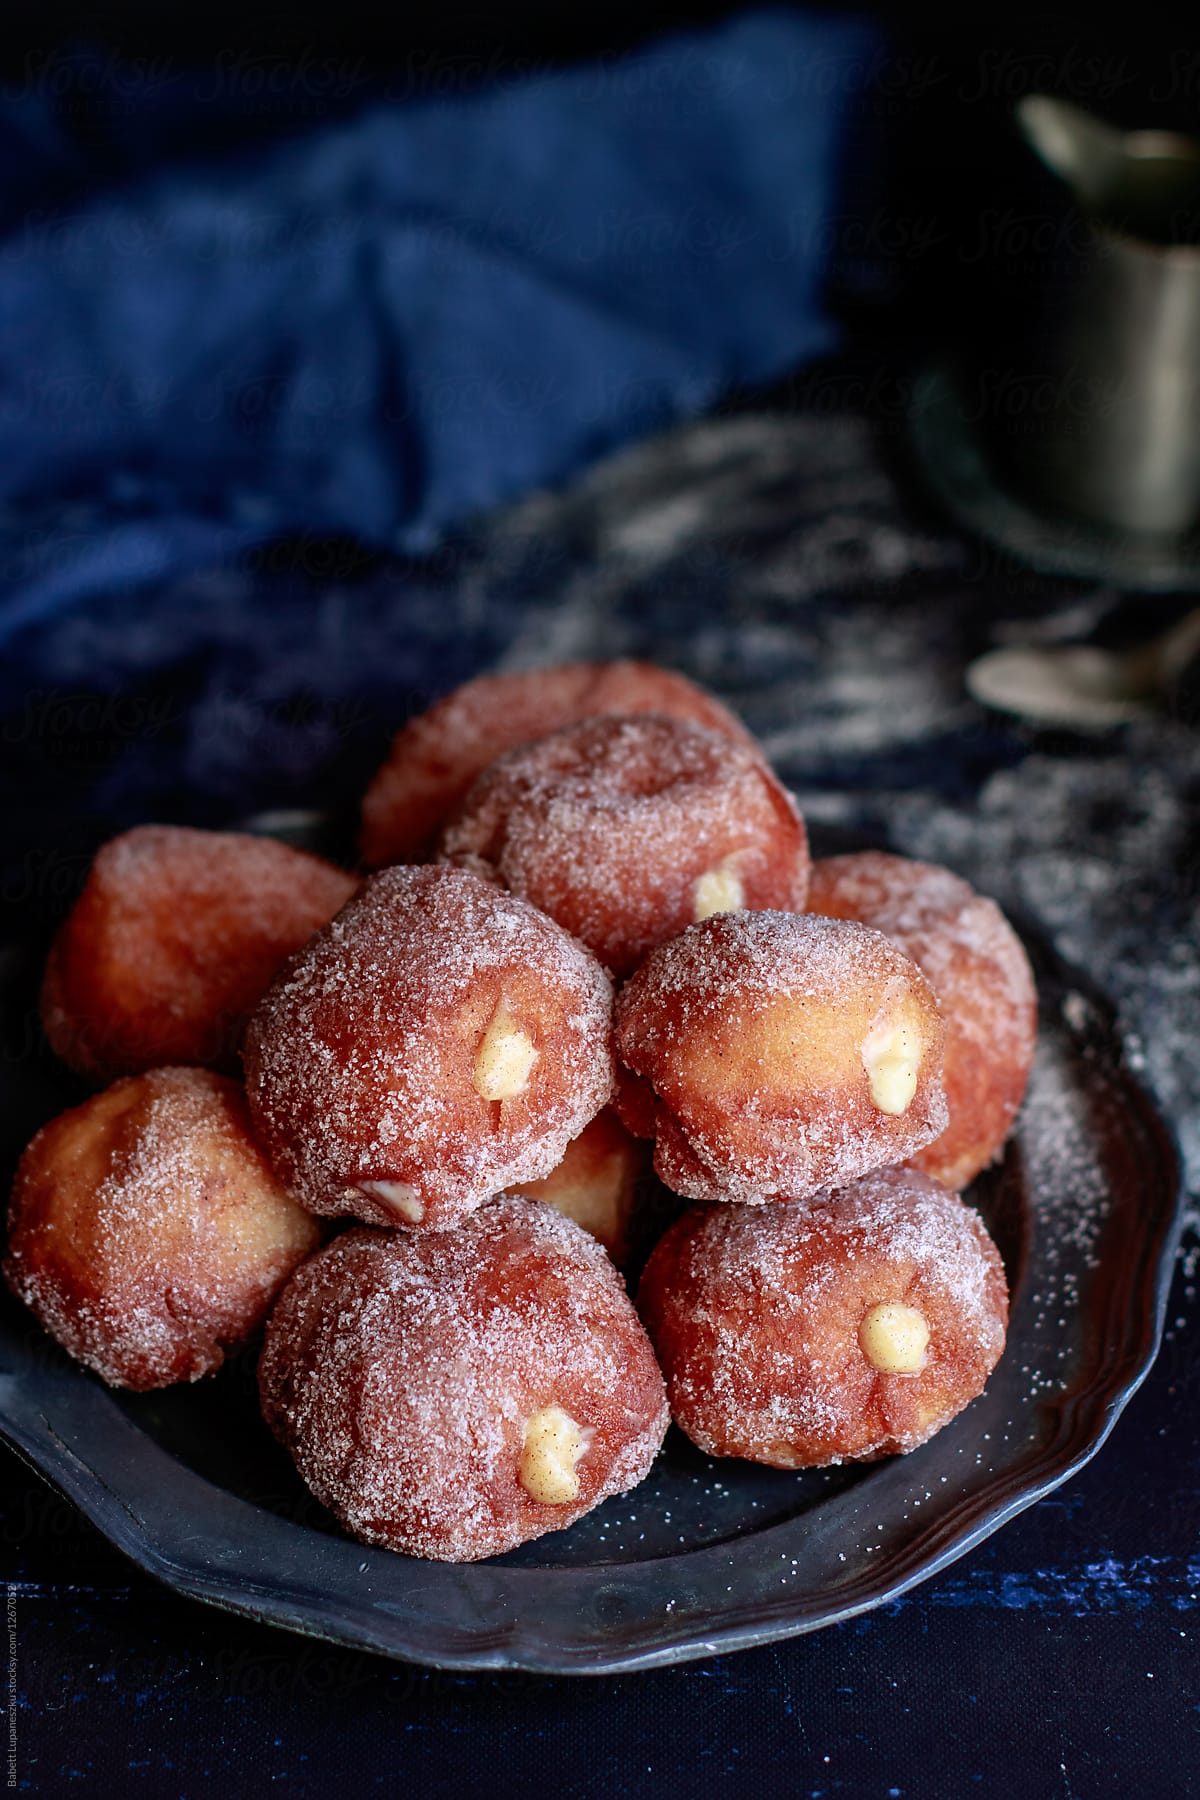 Homemade mini donuts